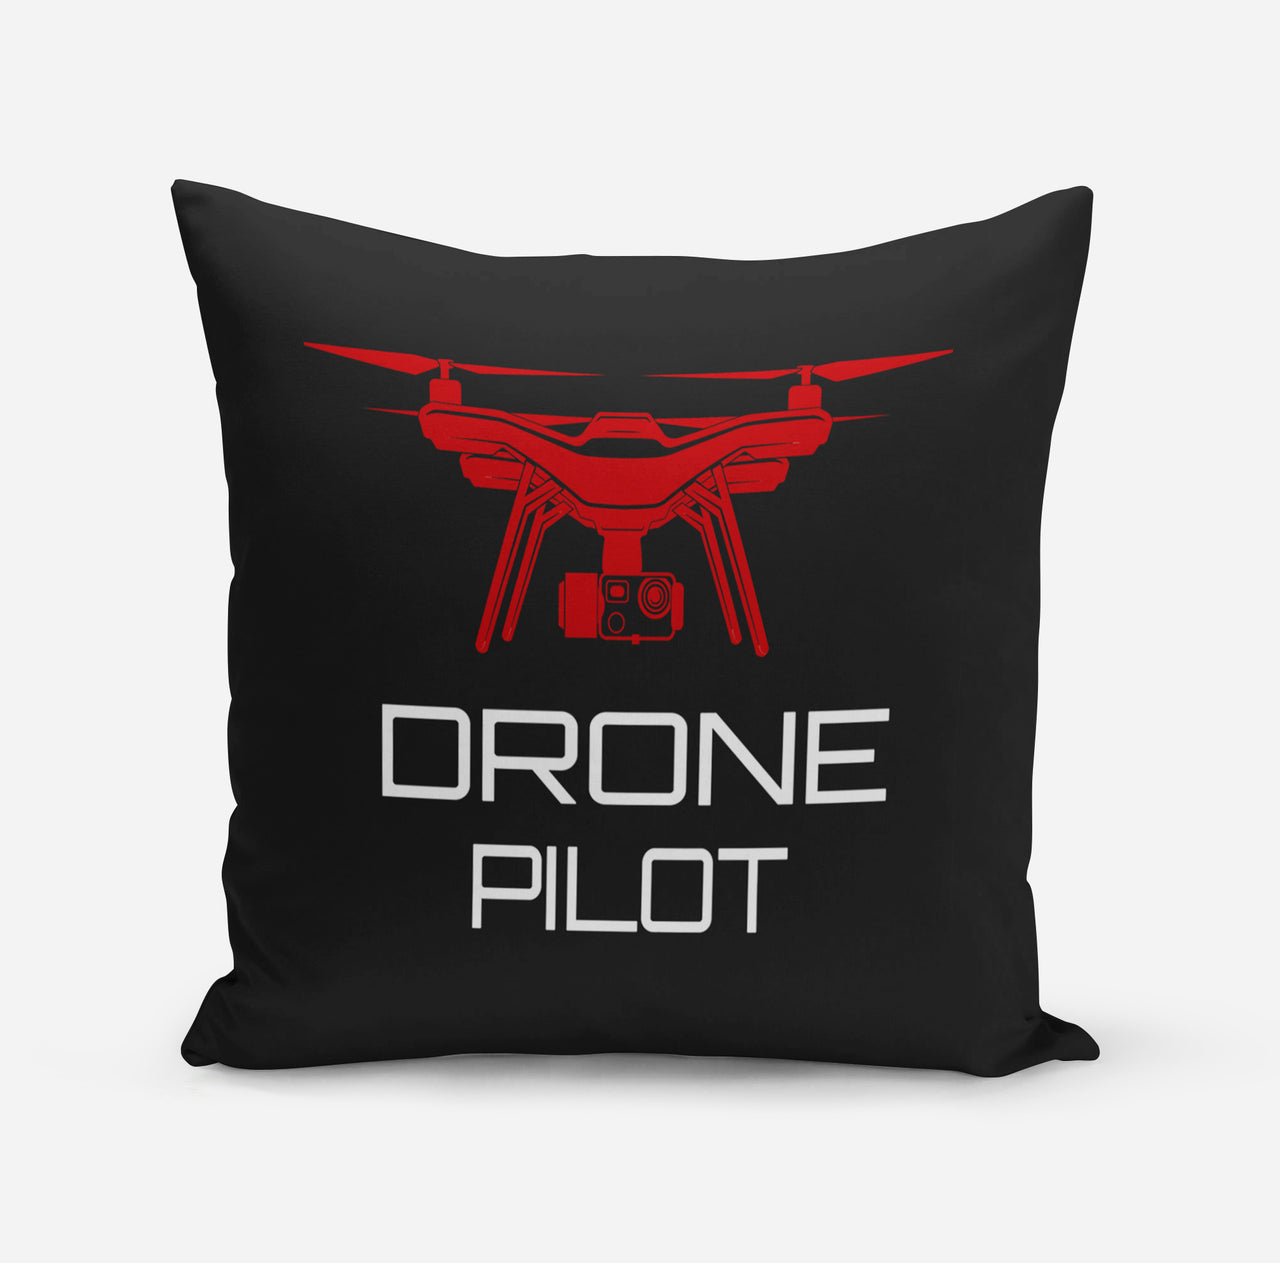 Drone Pilot Black Designed Pillows